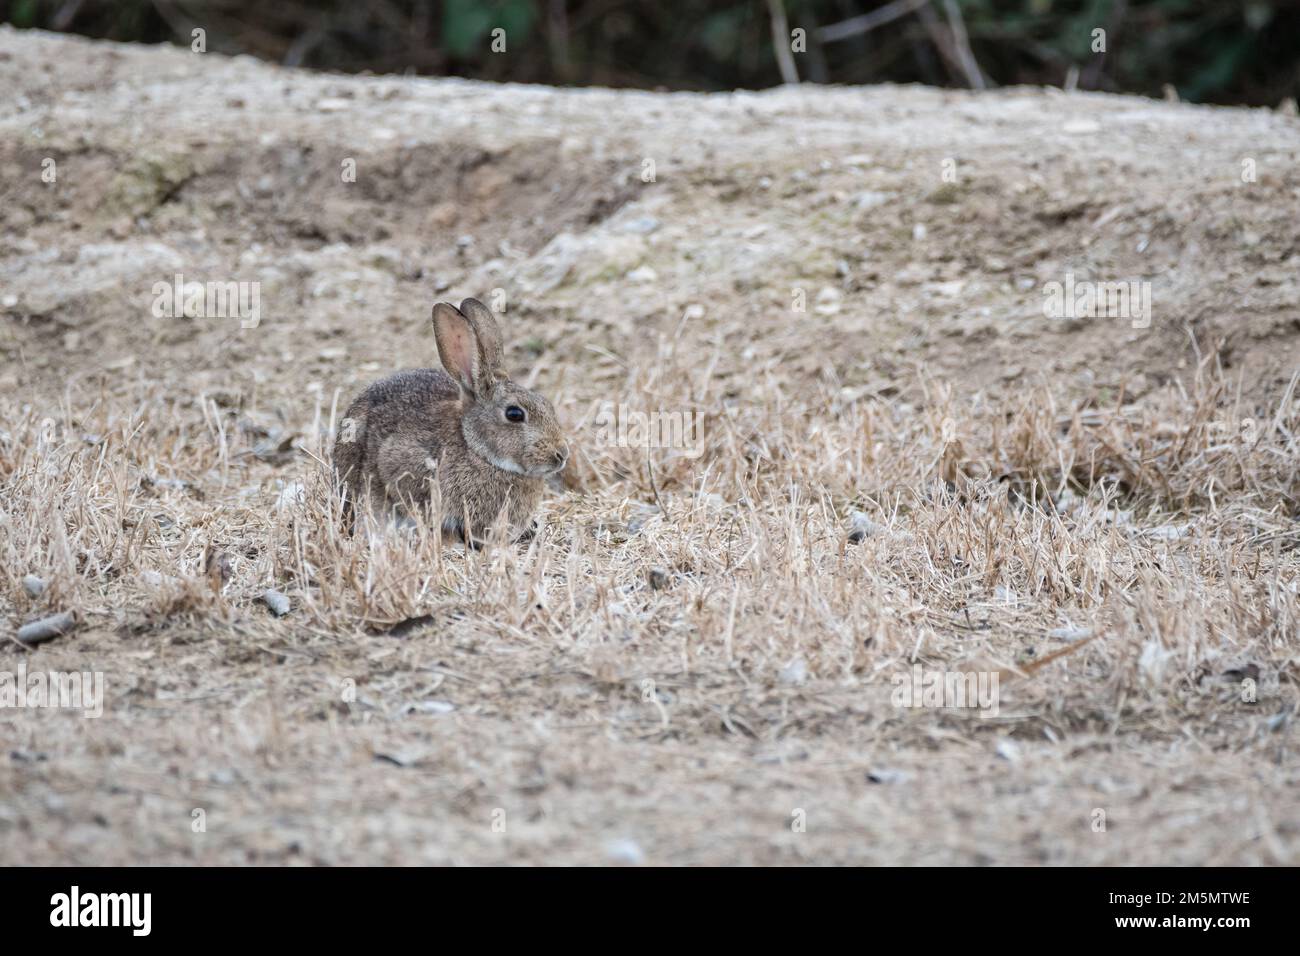 European rabbit, Oryctolagus cuniculus, on the ground, Ivars d'Urgell, Catalonia, Spain Stock Photo